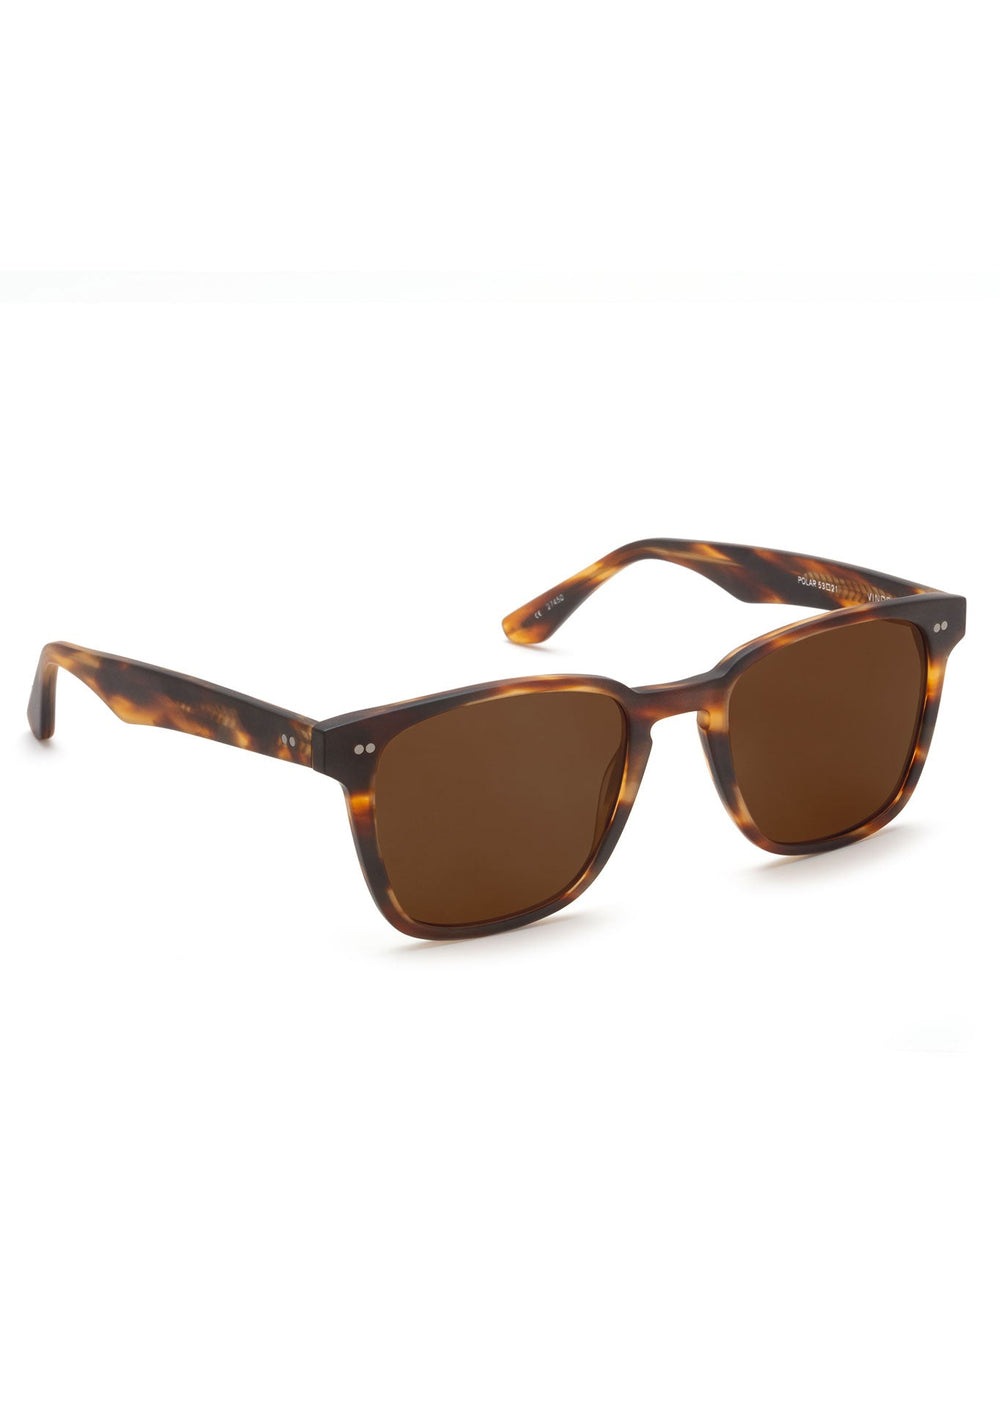 KREWE VINDEL | Matte Hickory Polarized Handcrafted, luxury designer brown acetate classic mens sunglasses